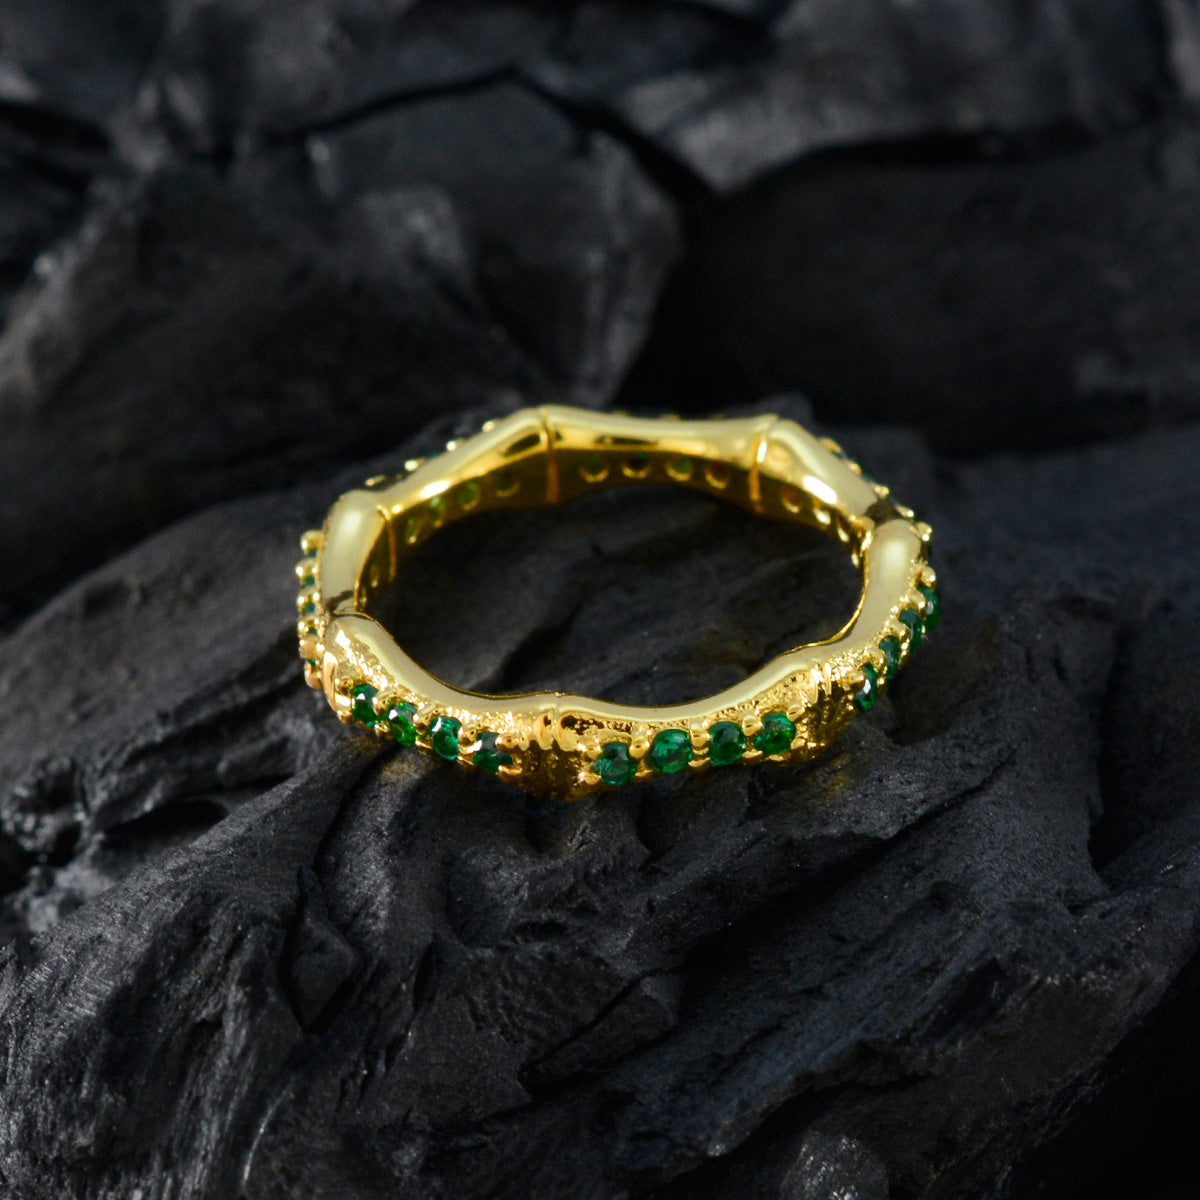 Riyo Designer Zilveren Ring met Geel Goud Plating Smaragd CZ Steen Ronde Vorm Prong Setting Aangepaste Sieraden Moederdag Ring